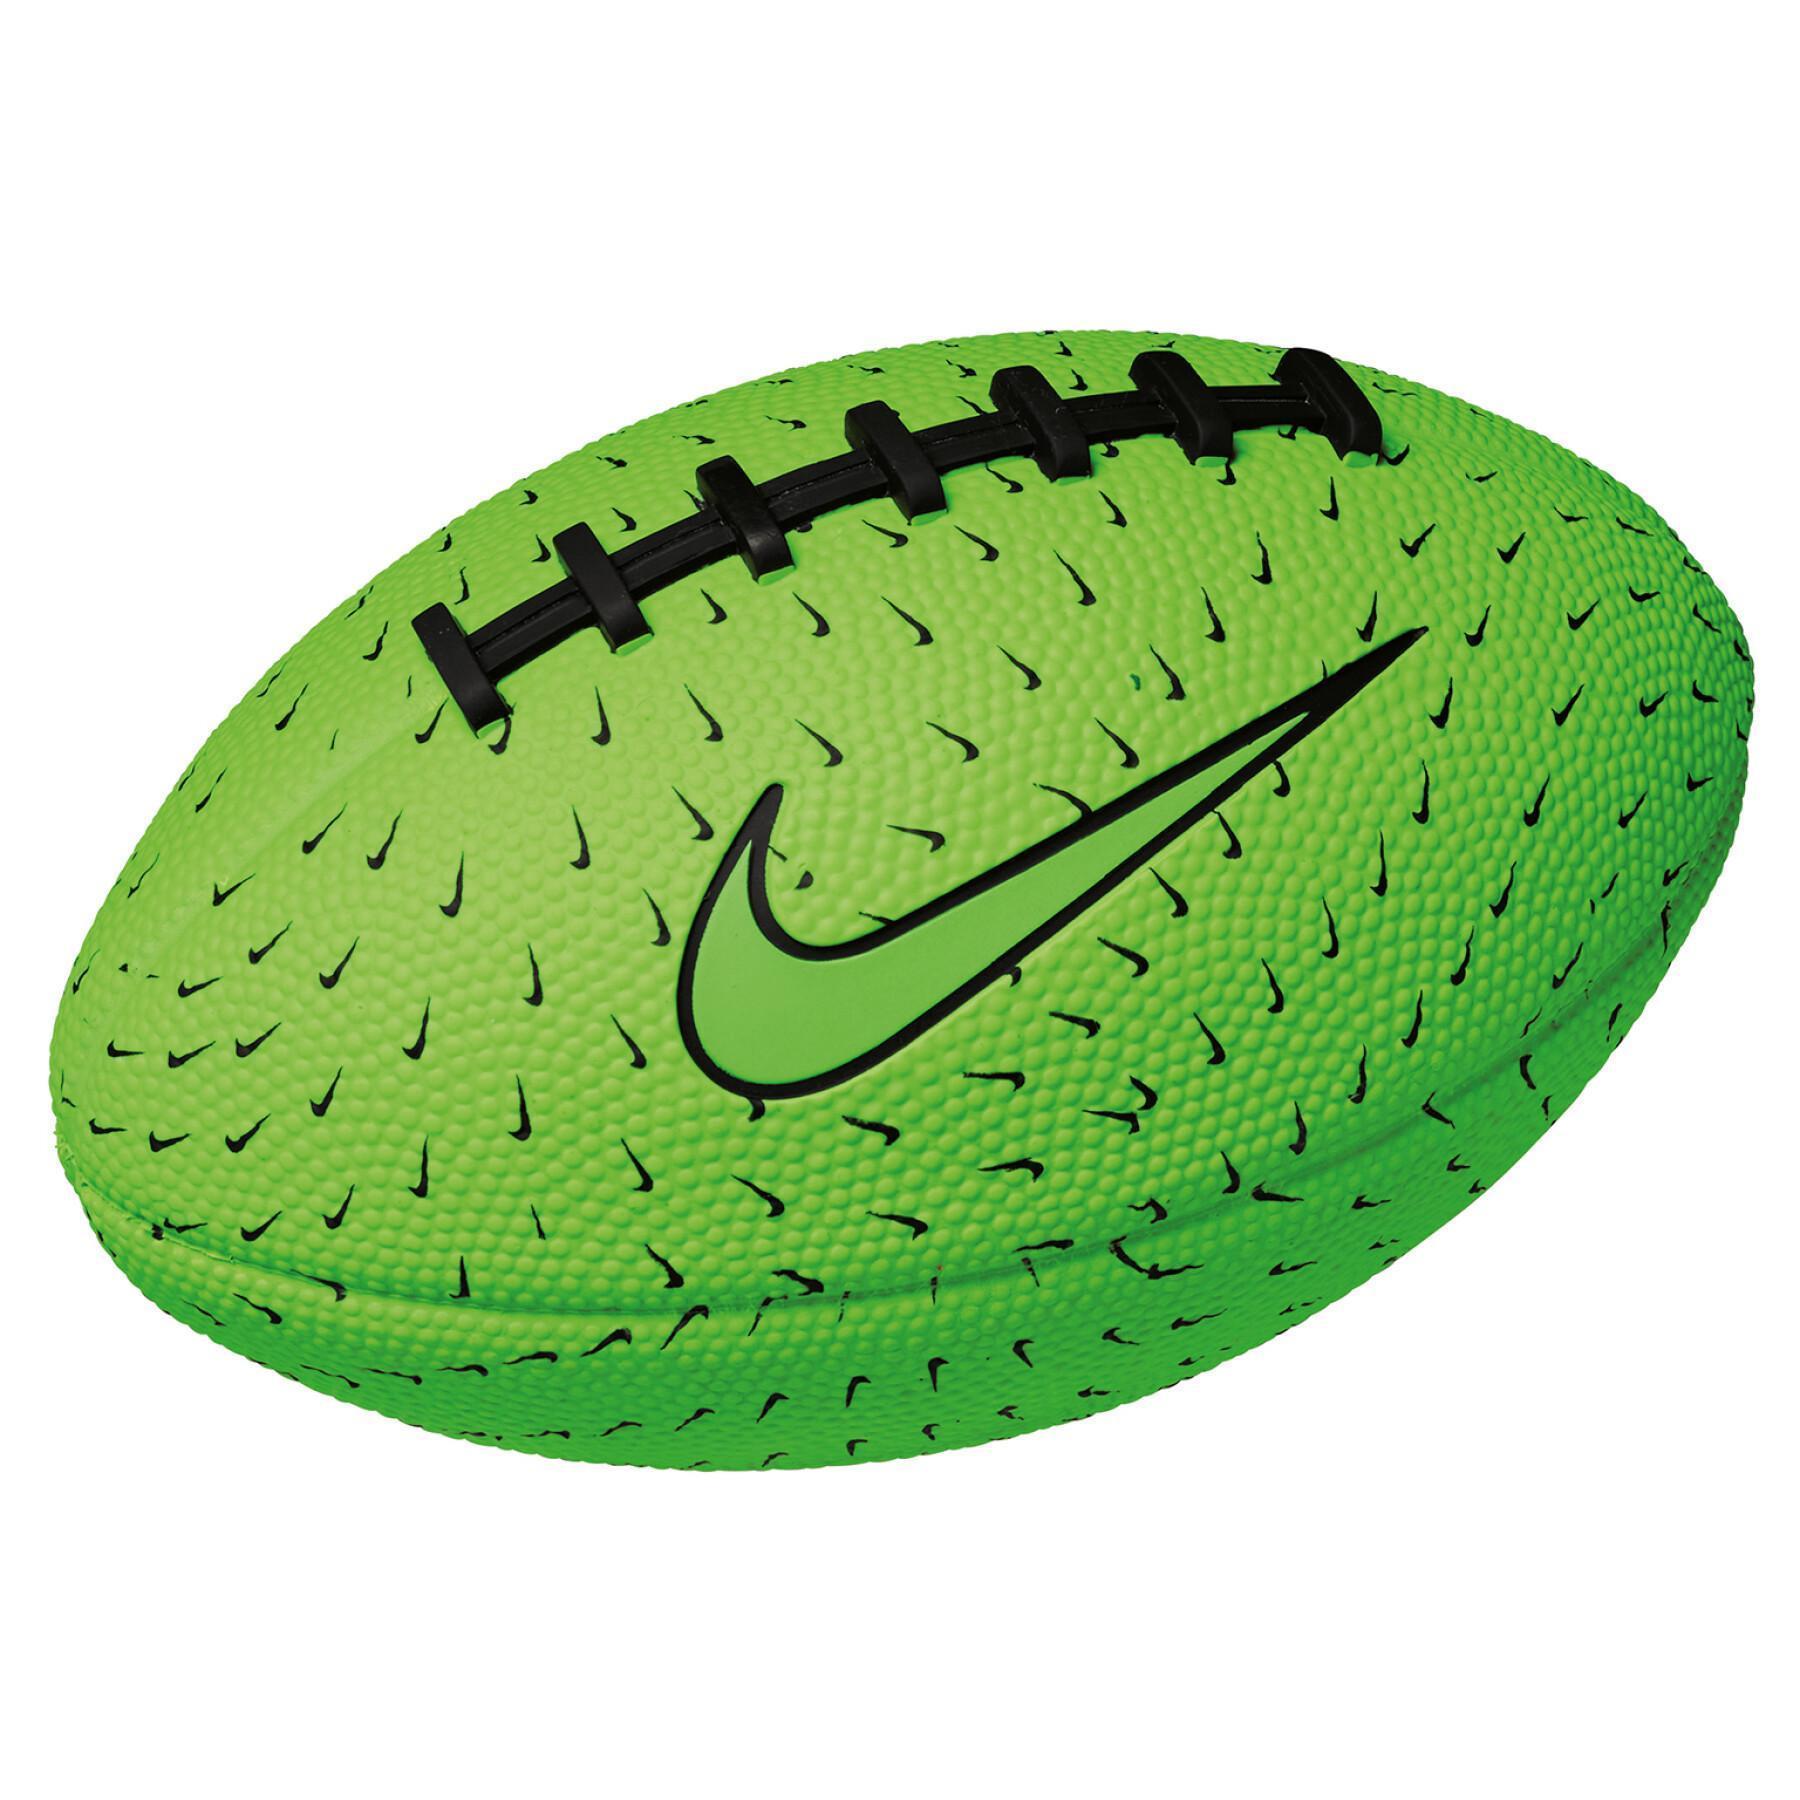 Ballon Nike Playground FB Mini Deflated